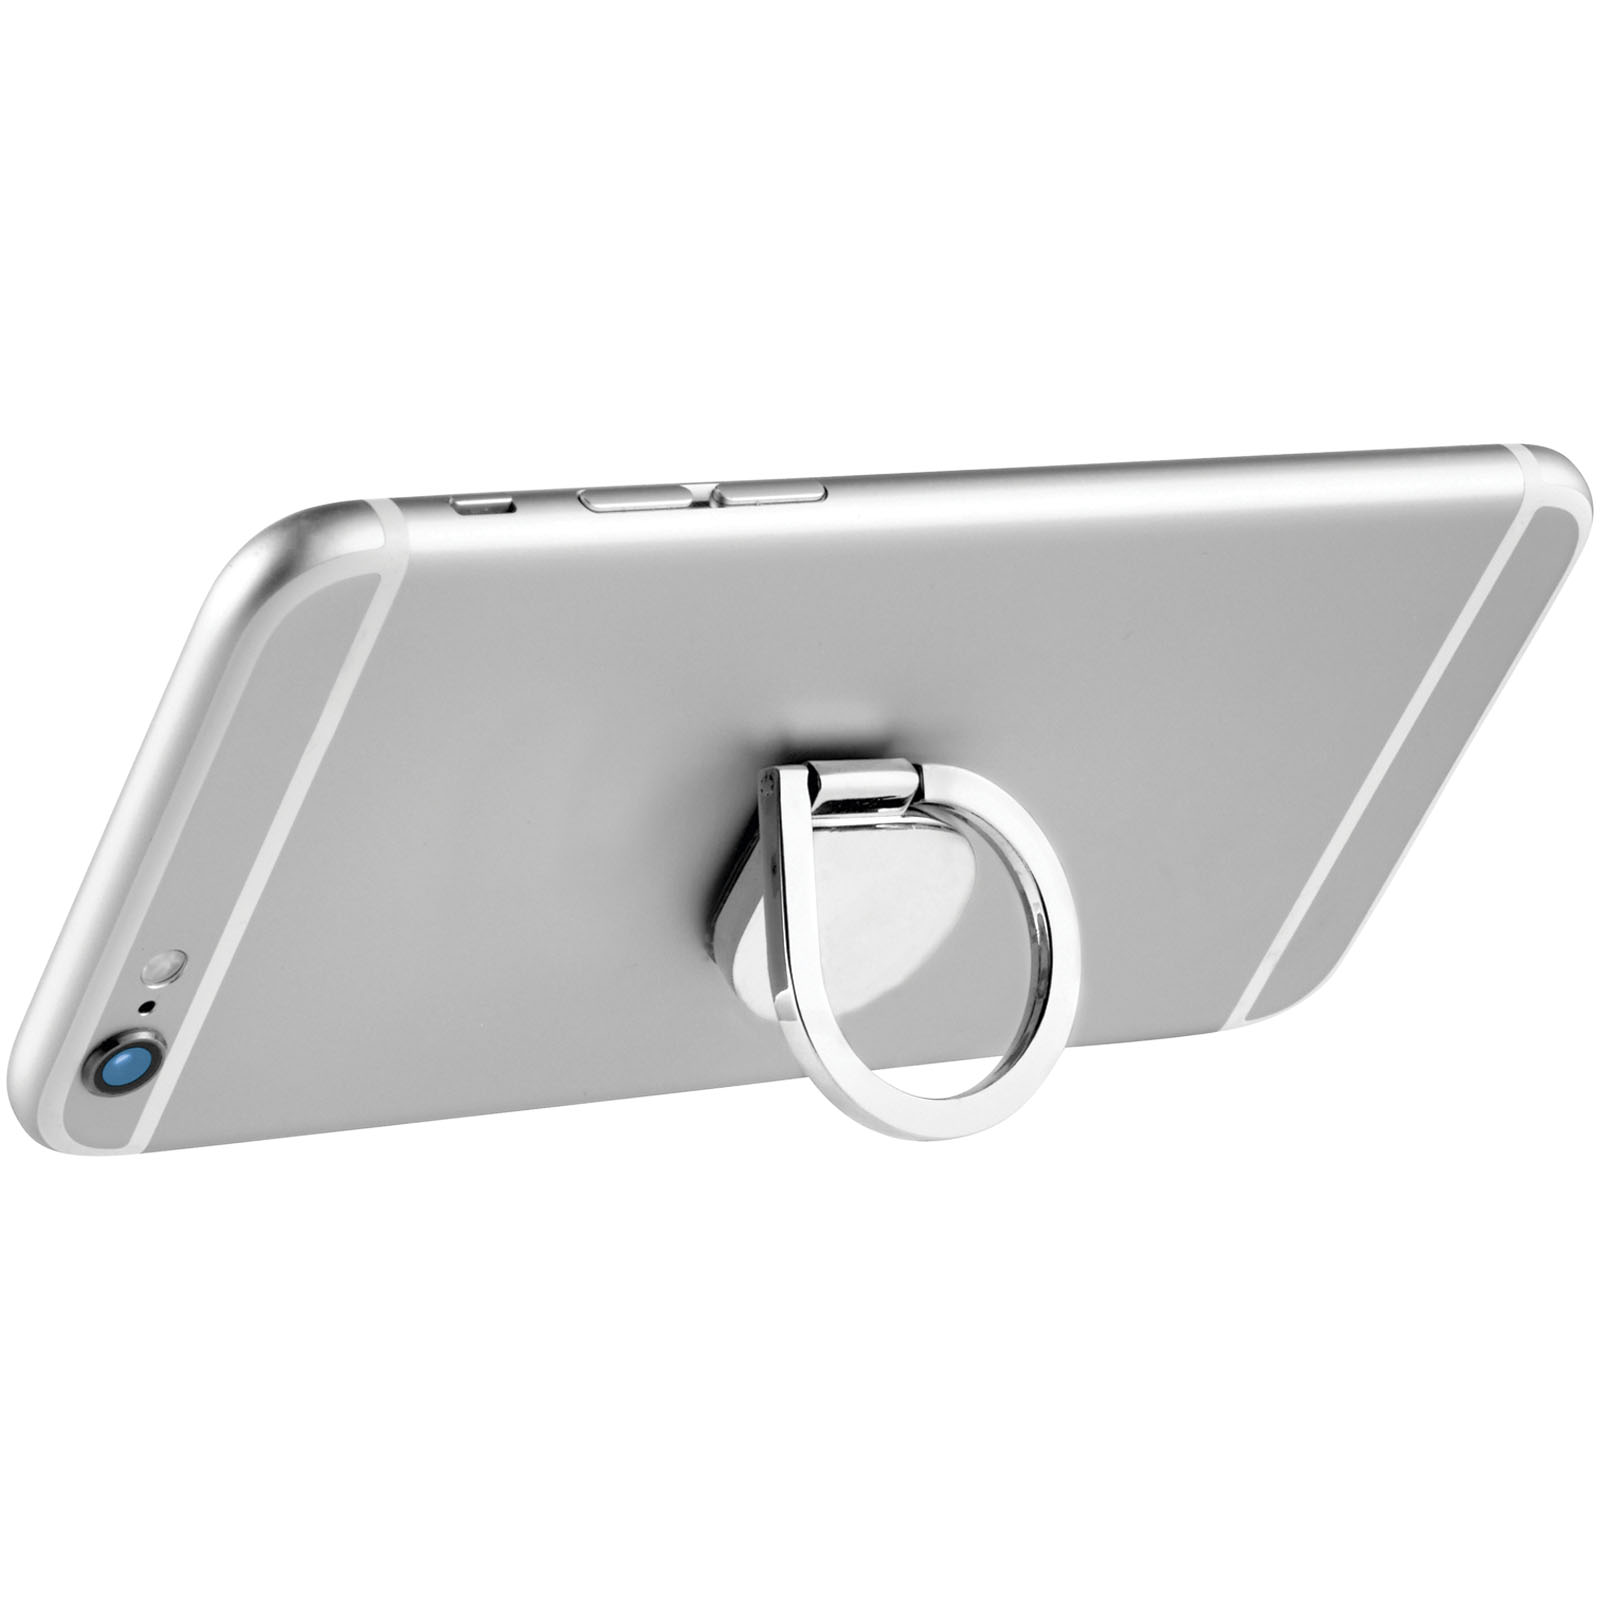 Technology - Cell aluminium ring phone holder